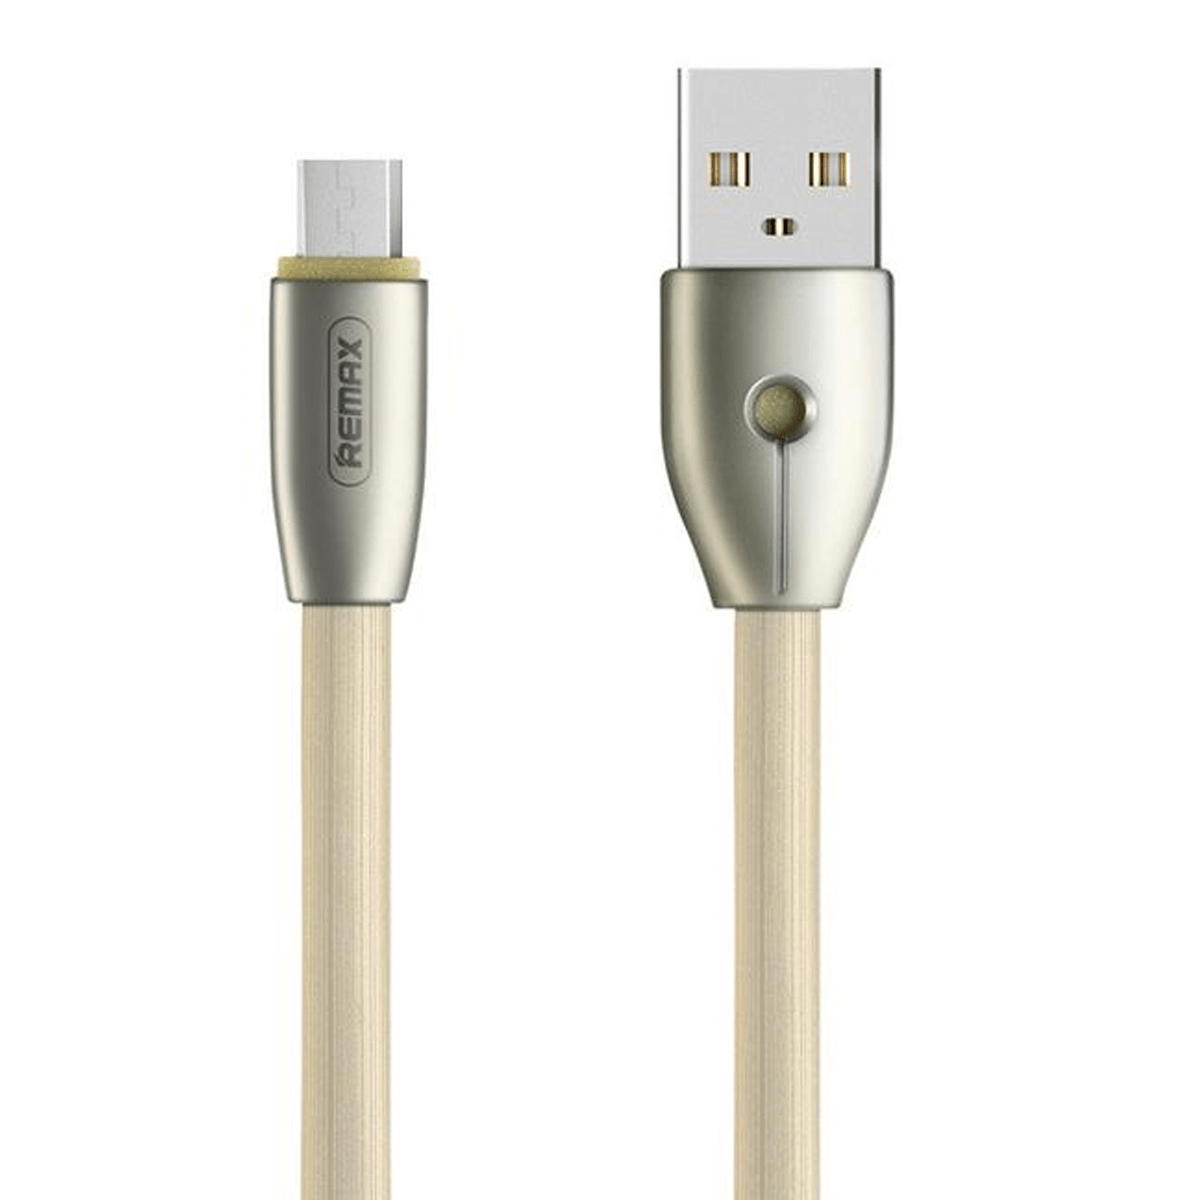 REMAX Data Cable Knight Micro - USB